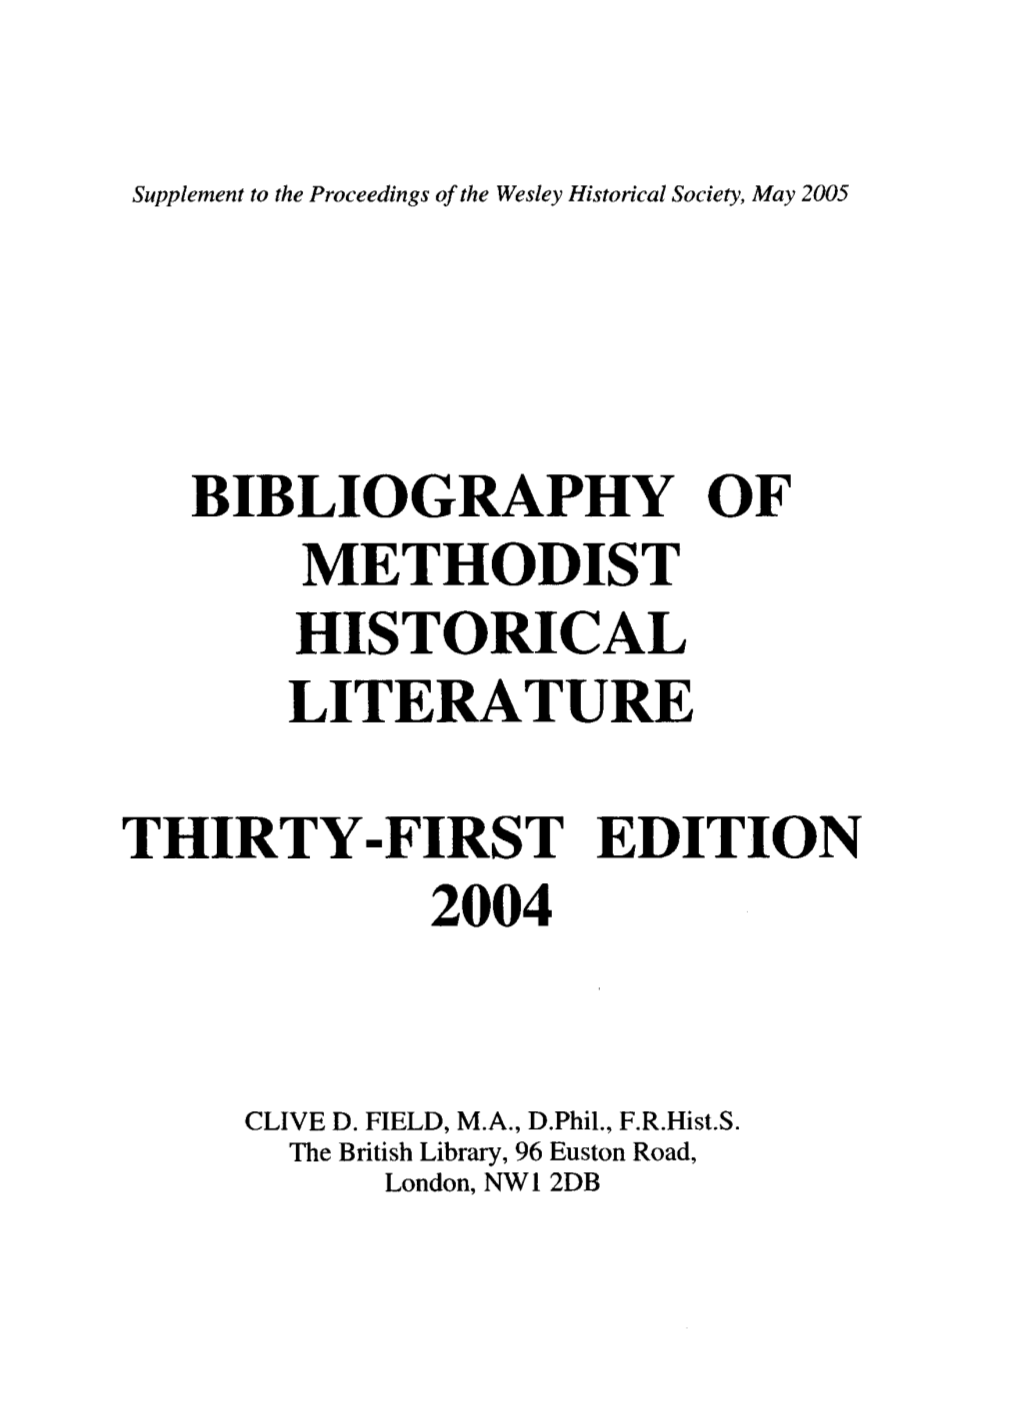 Bibliography of Methodist Historical Literature Thirty